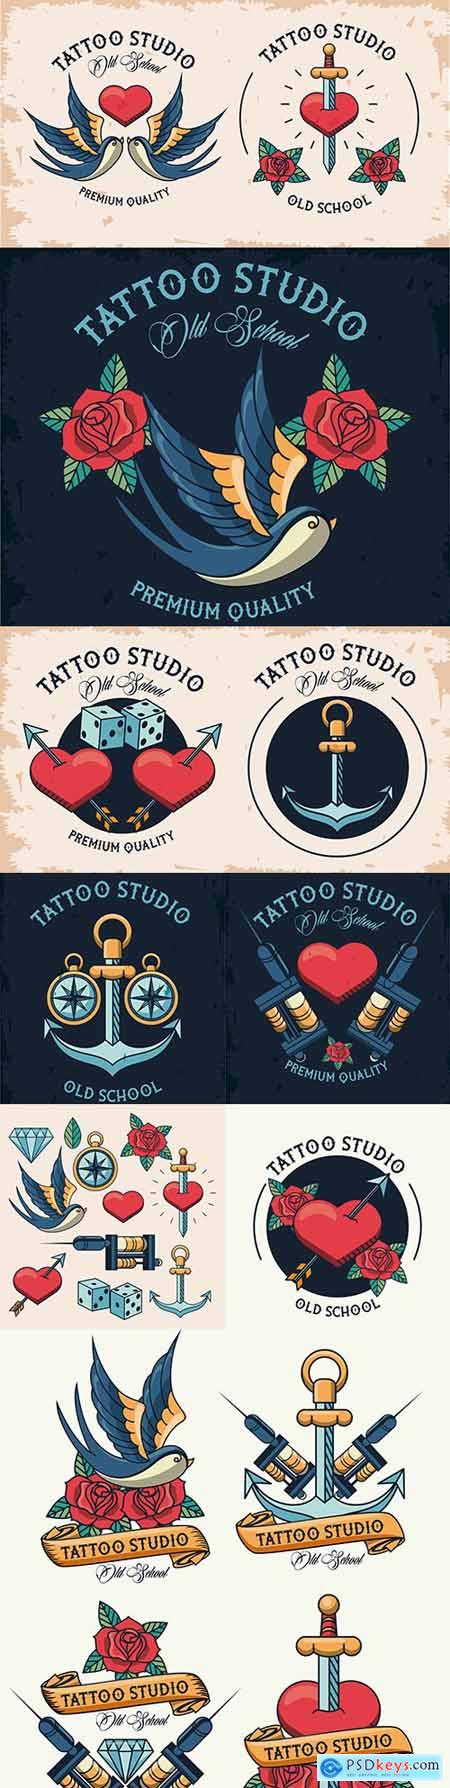 Studio tattoo set design elements and logo